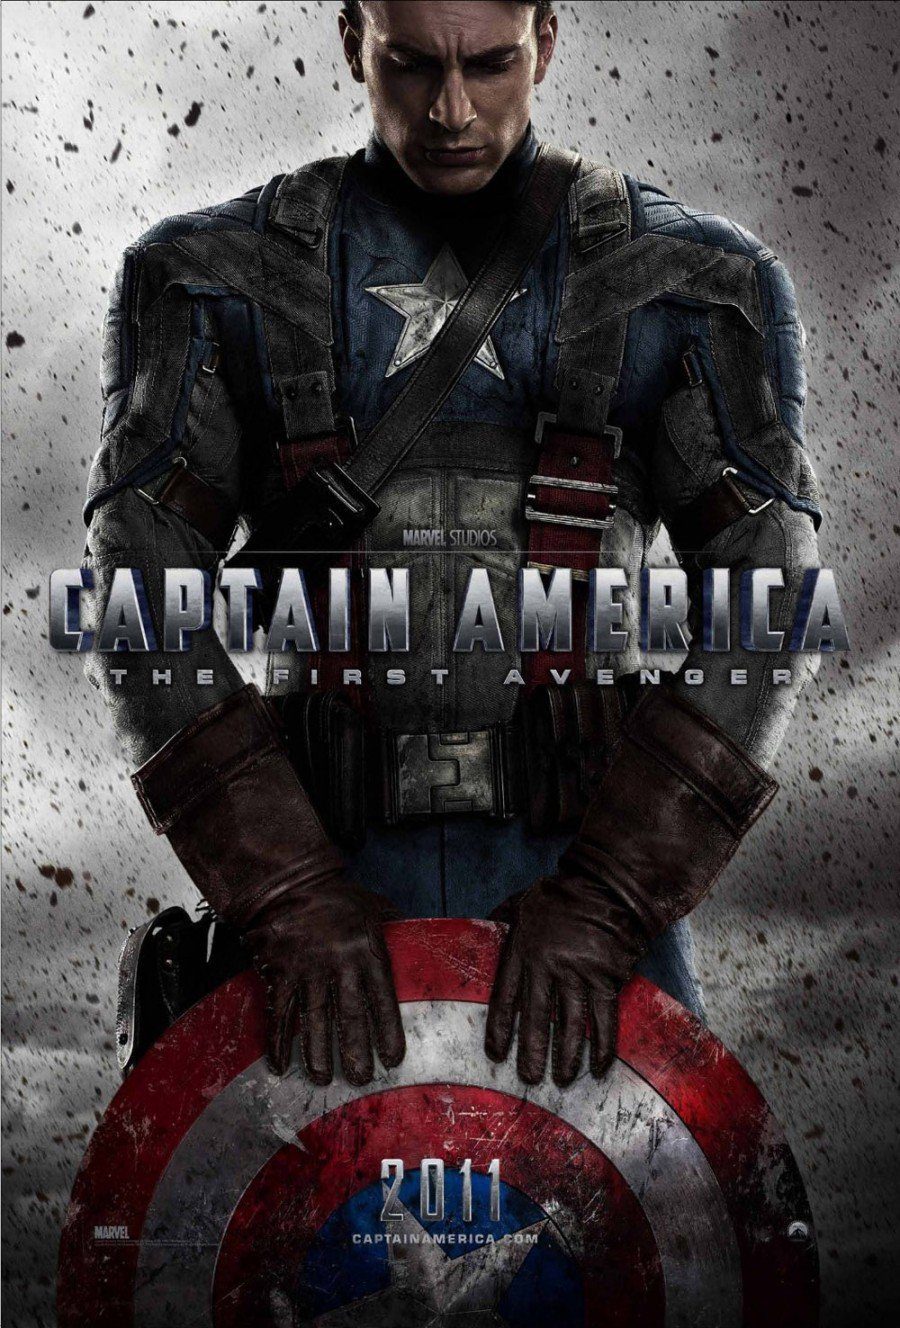 Cartel de Capitán América: El primer vengador - Teaser